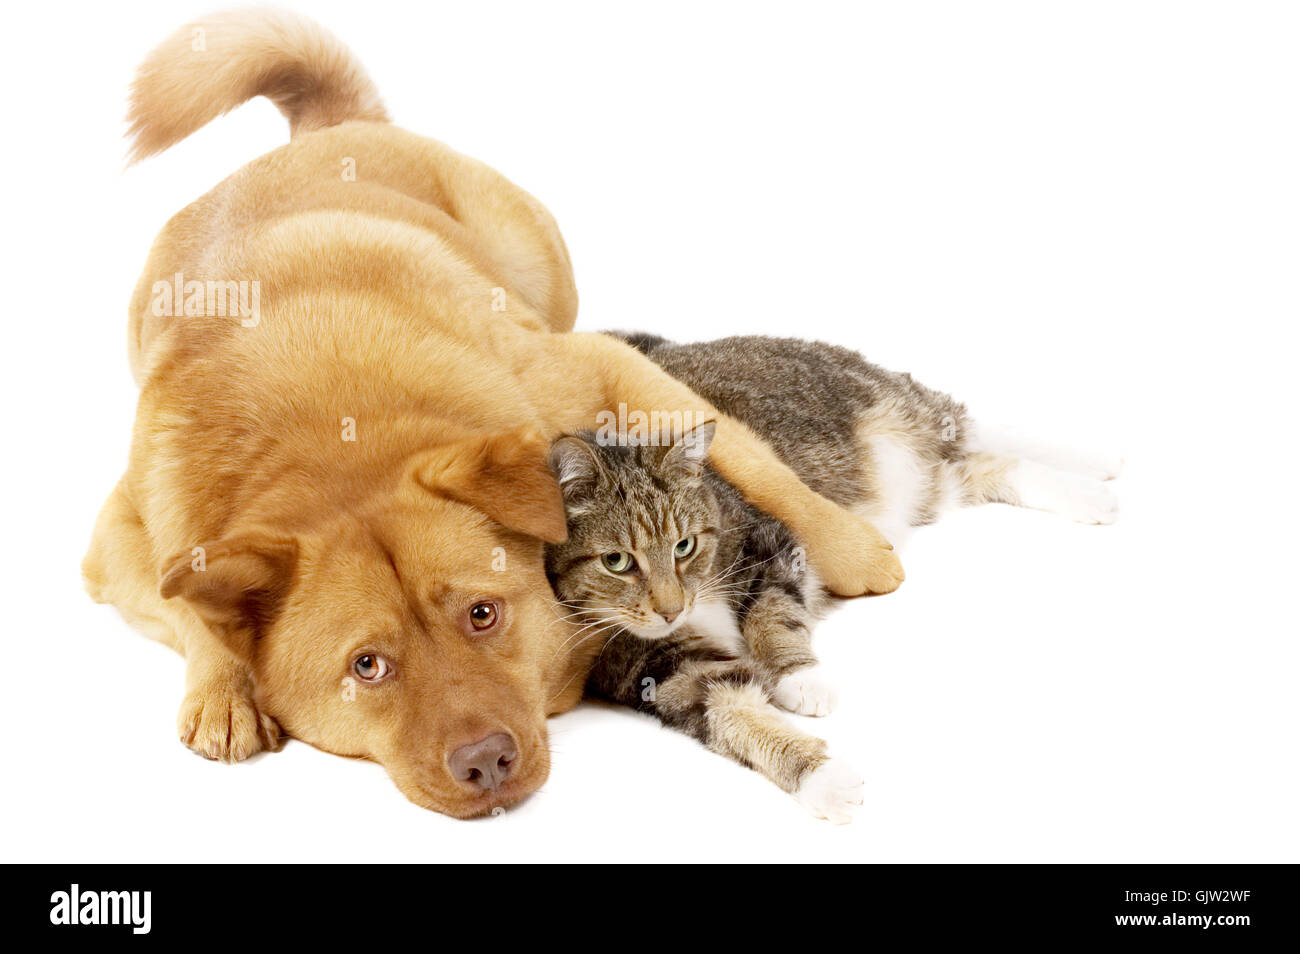 animal pet dog Stock Photo